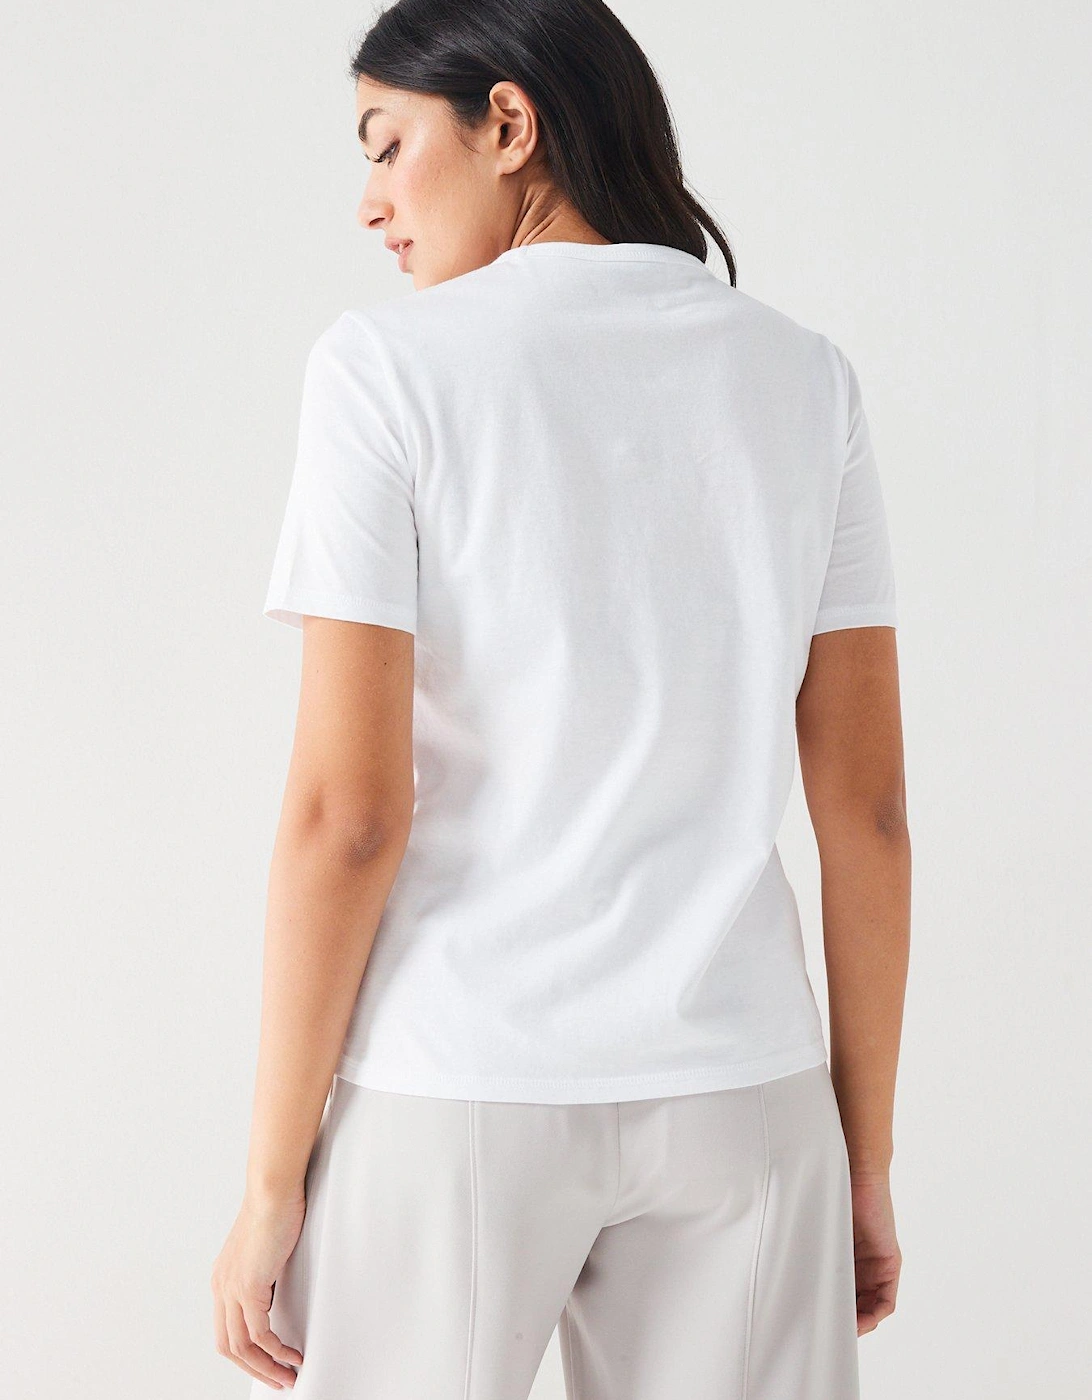 Tshirt With Pocket - White